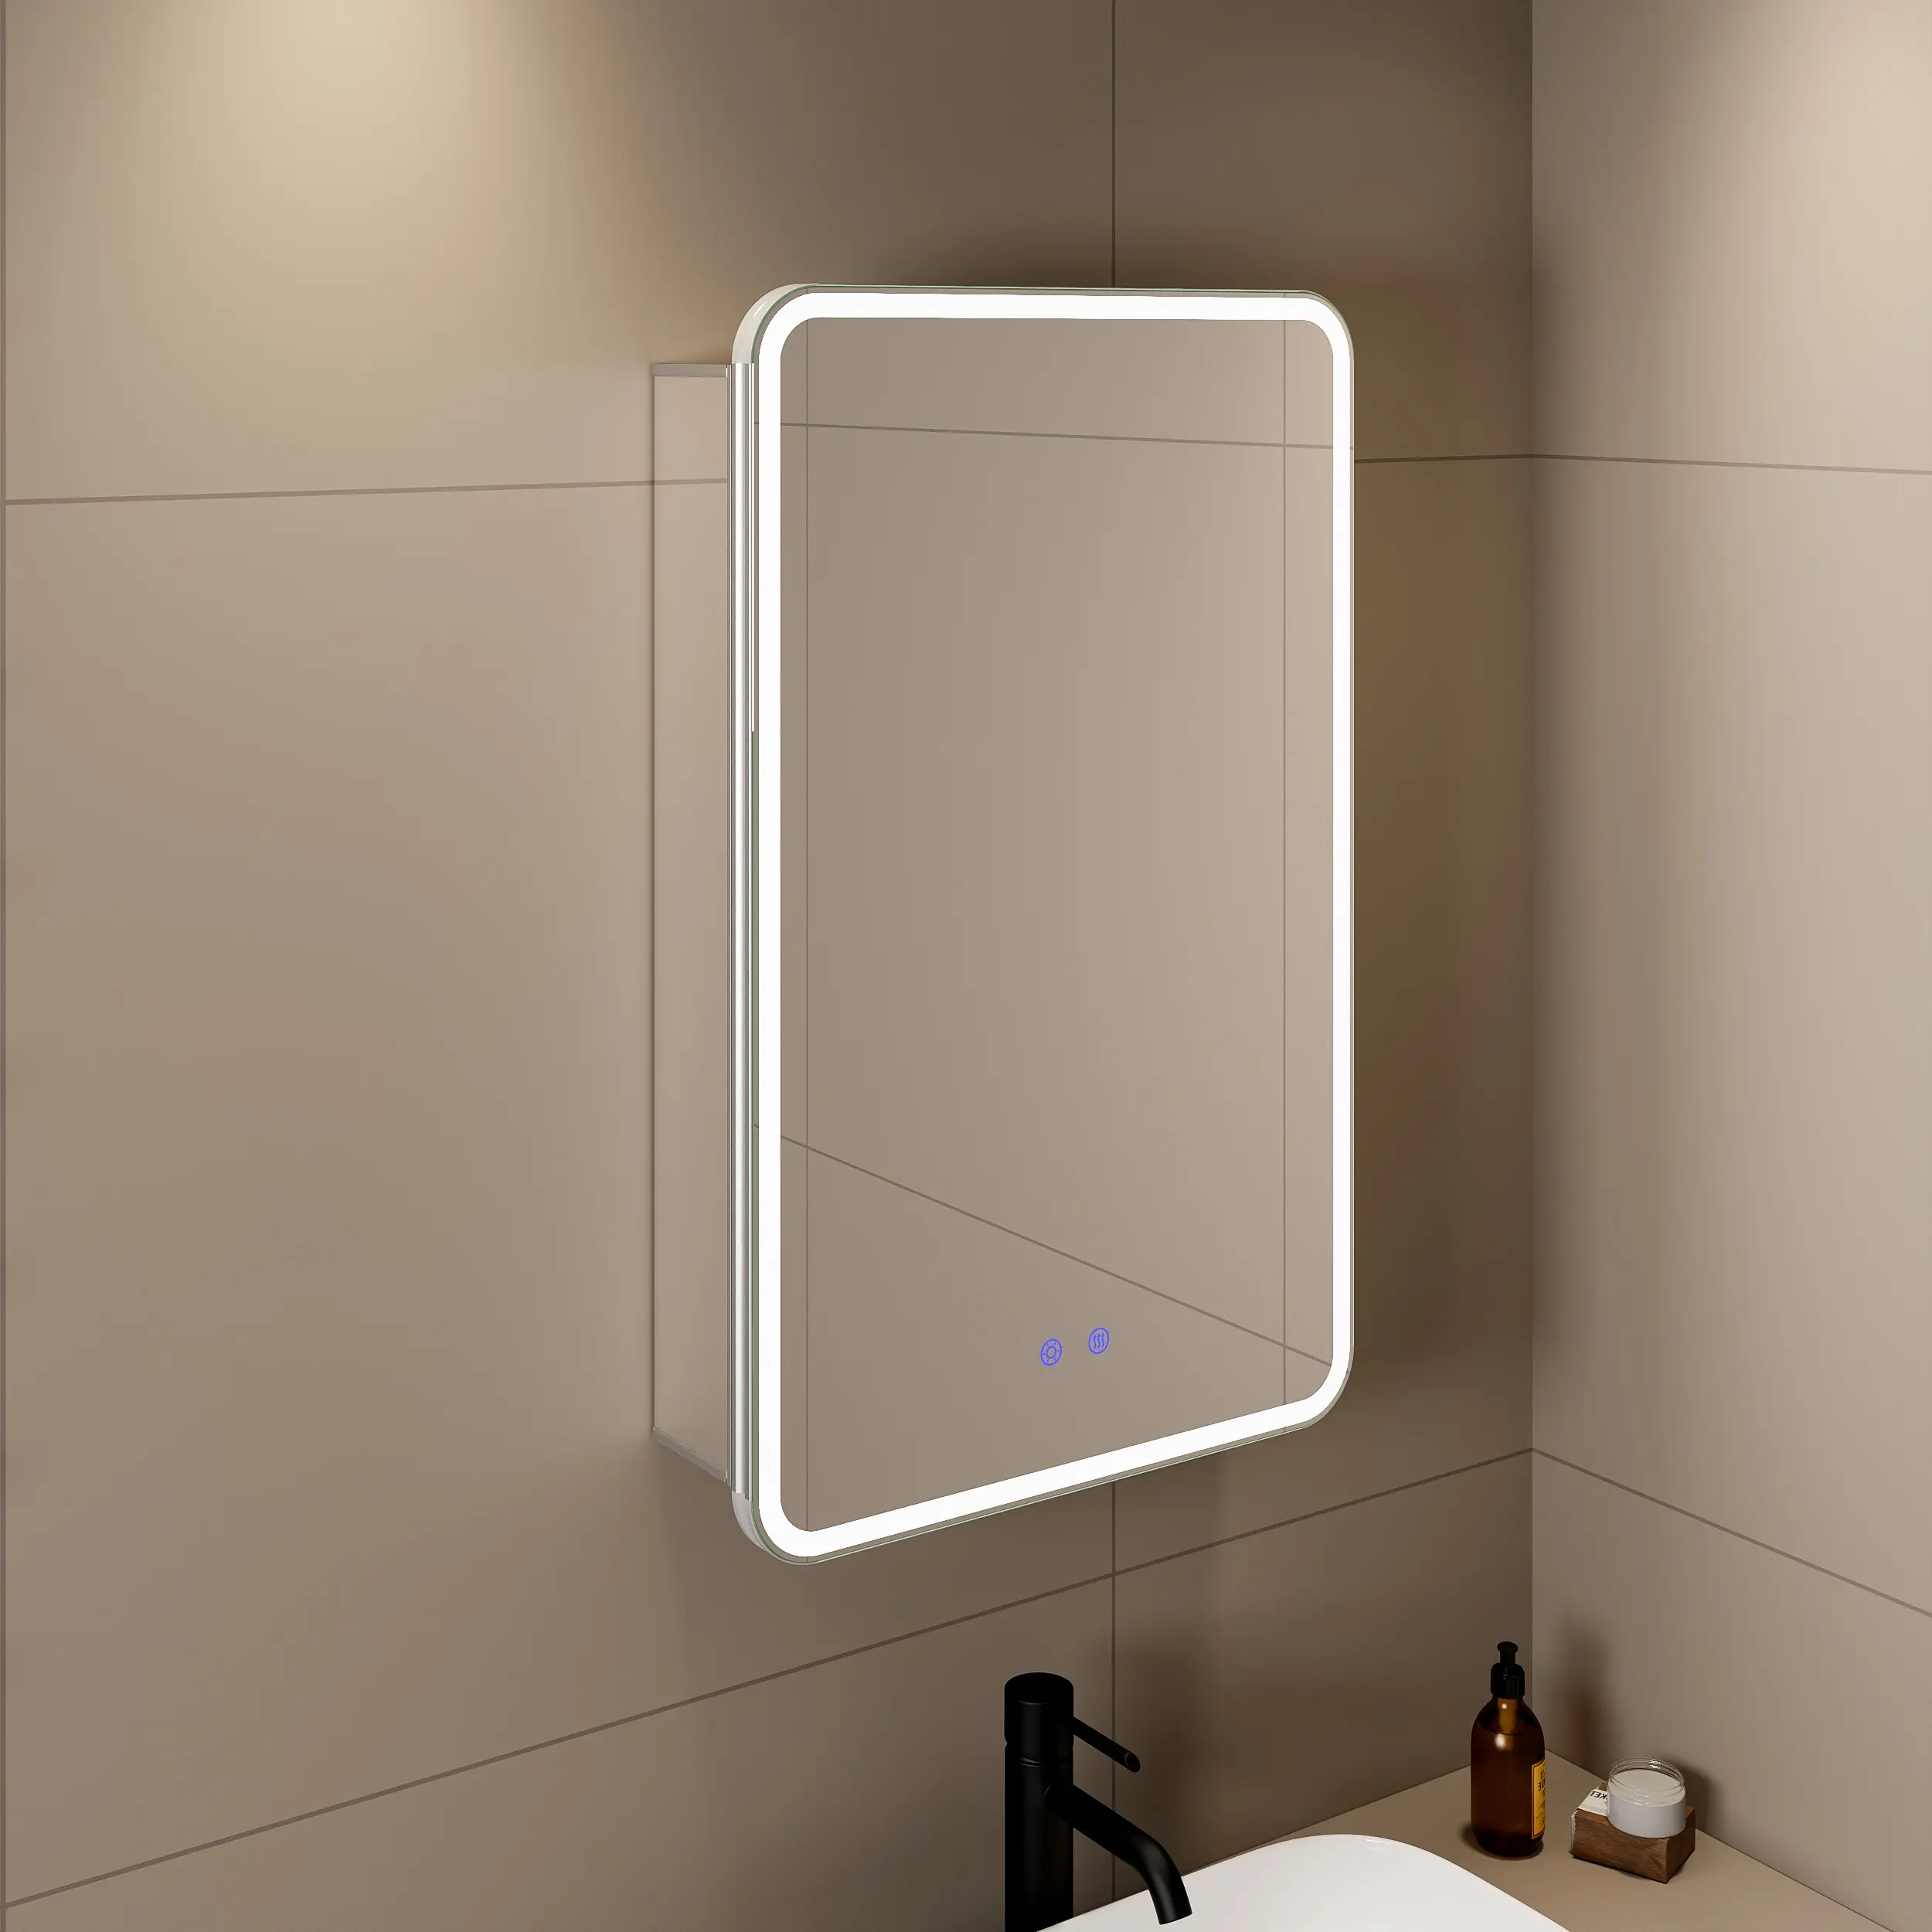 Lampu Led pintar bingkai aluminium, 3 warna lampu Defogger Toilet rias kamar mandi obat dengan lampu kabinet cermin